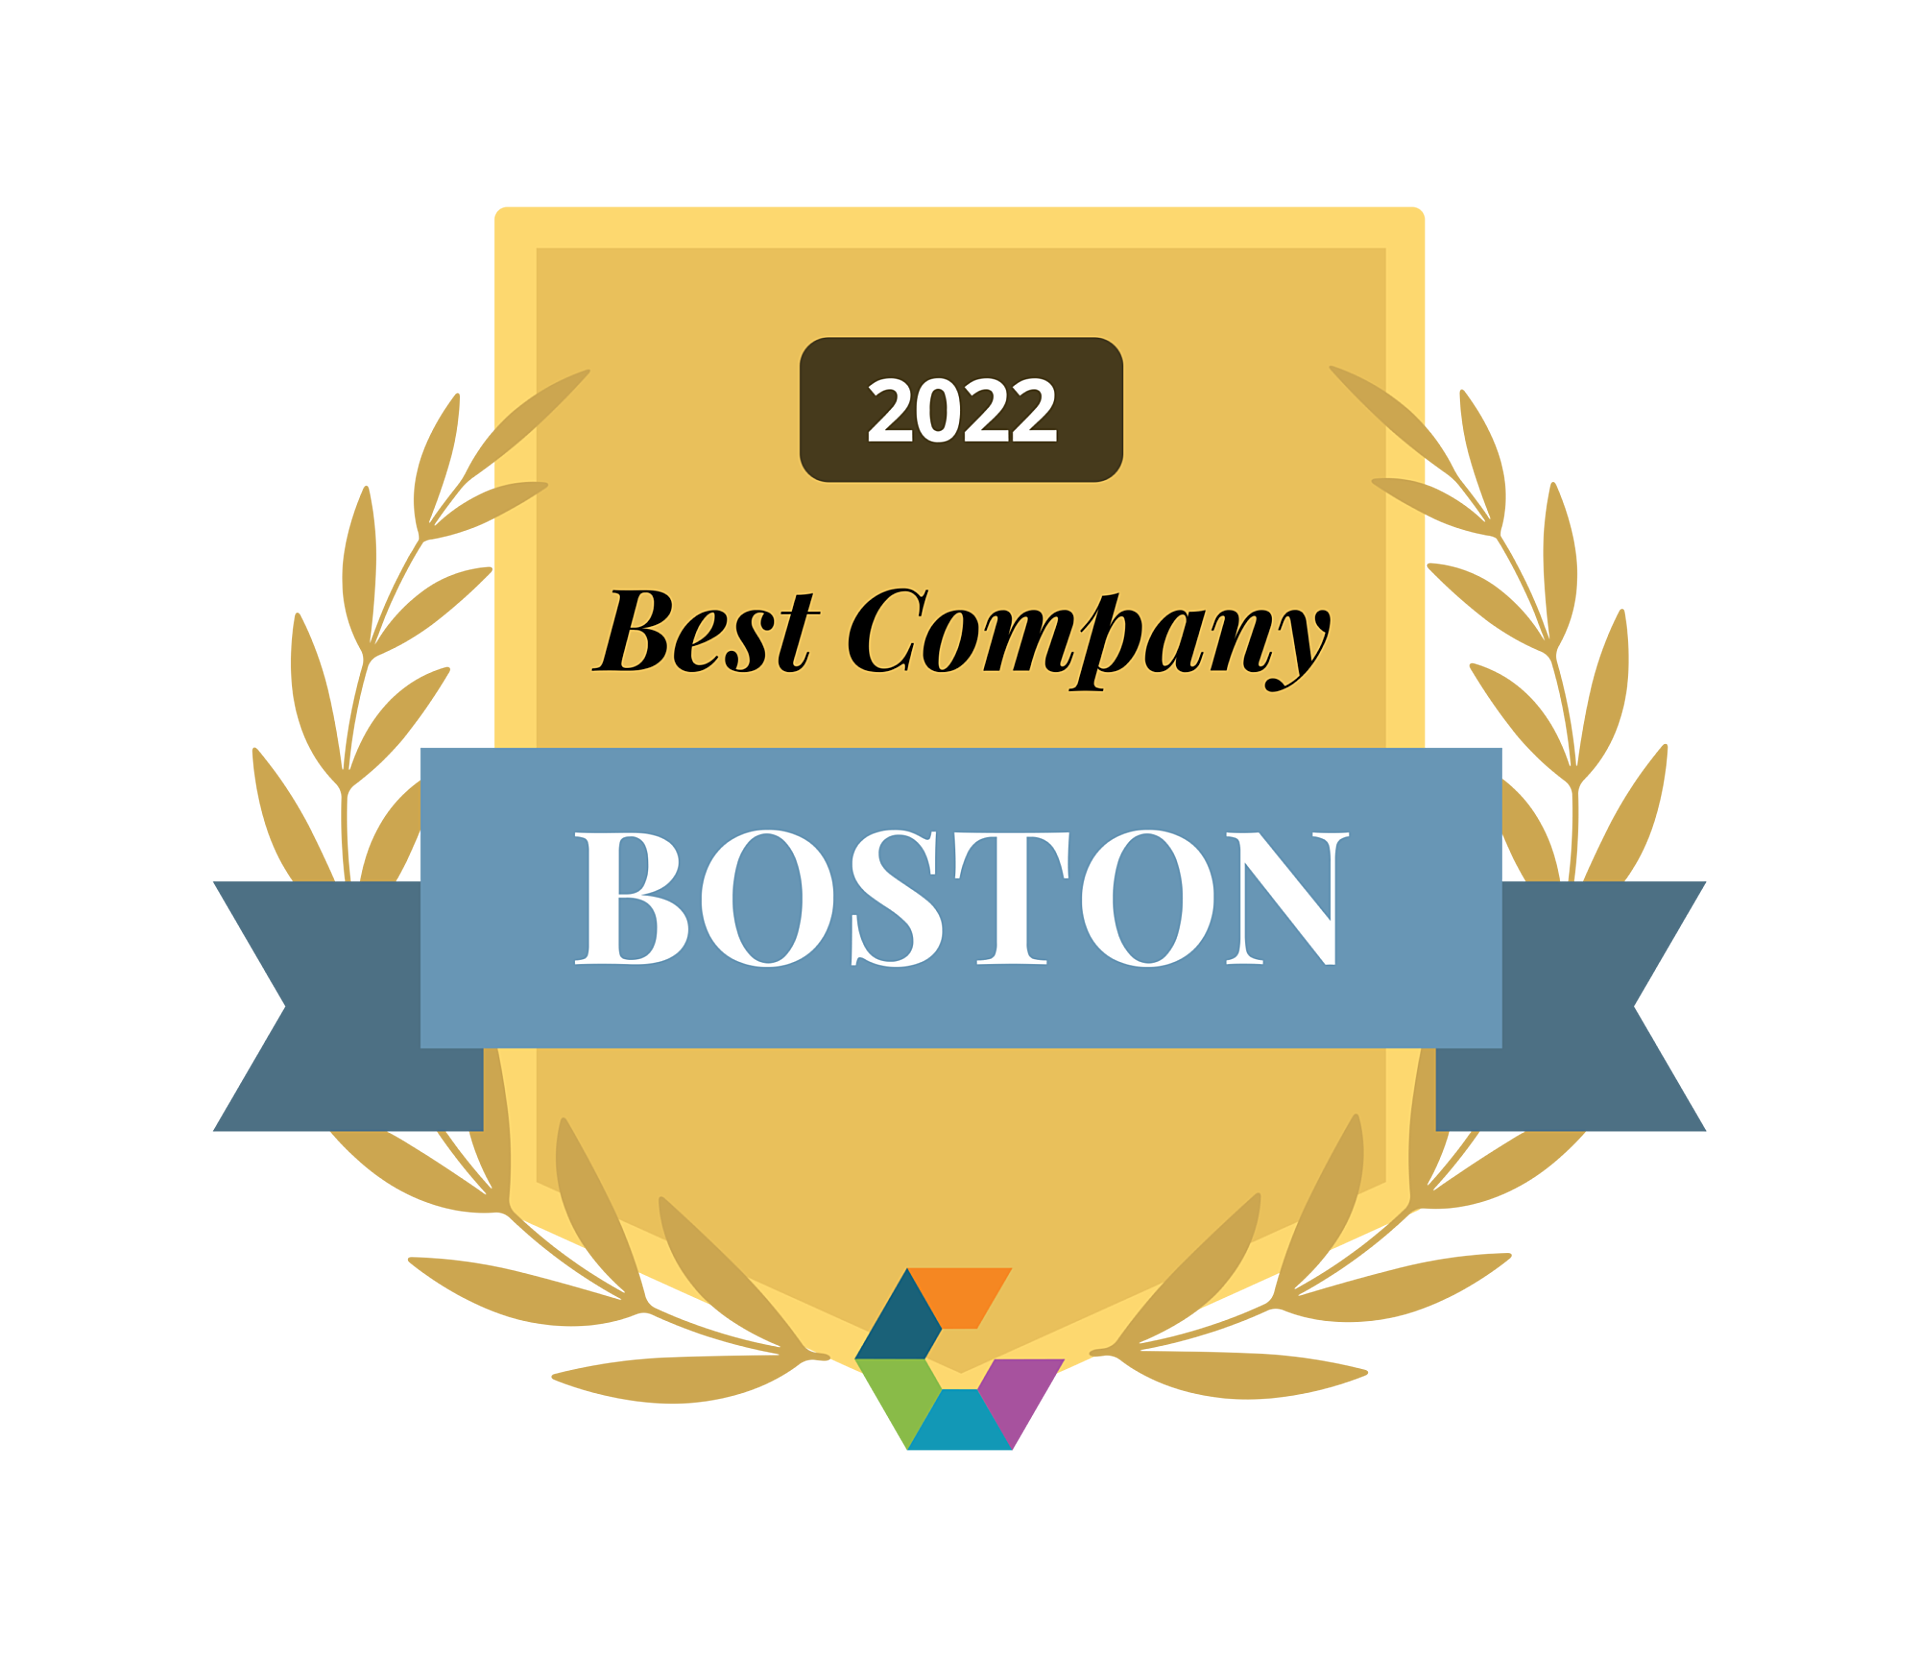 Best company 2022 - Boston